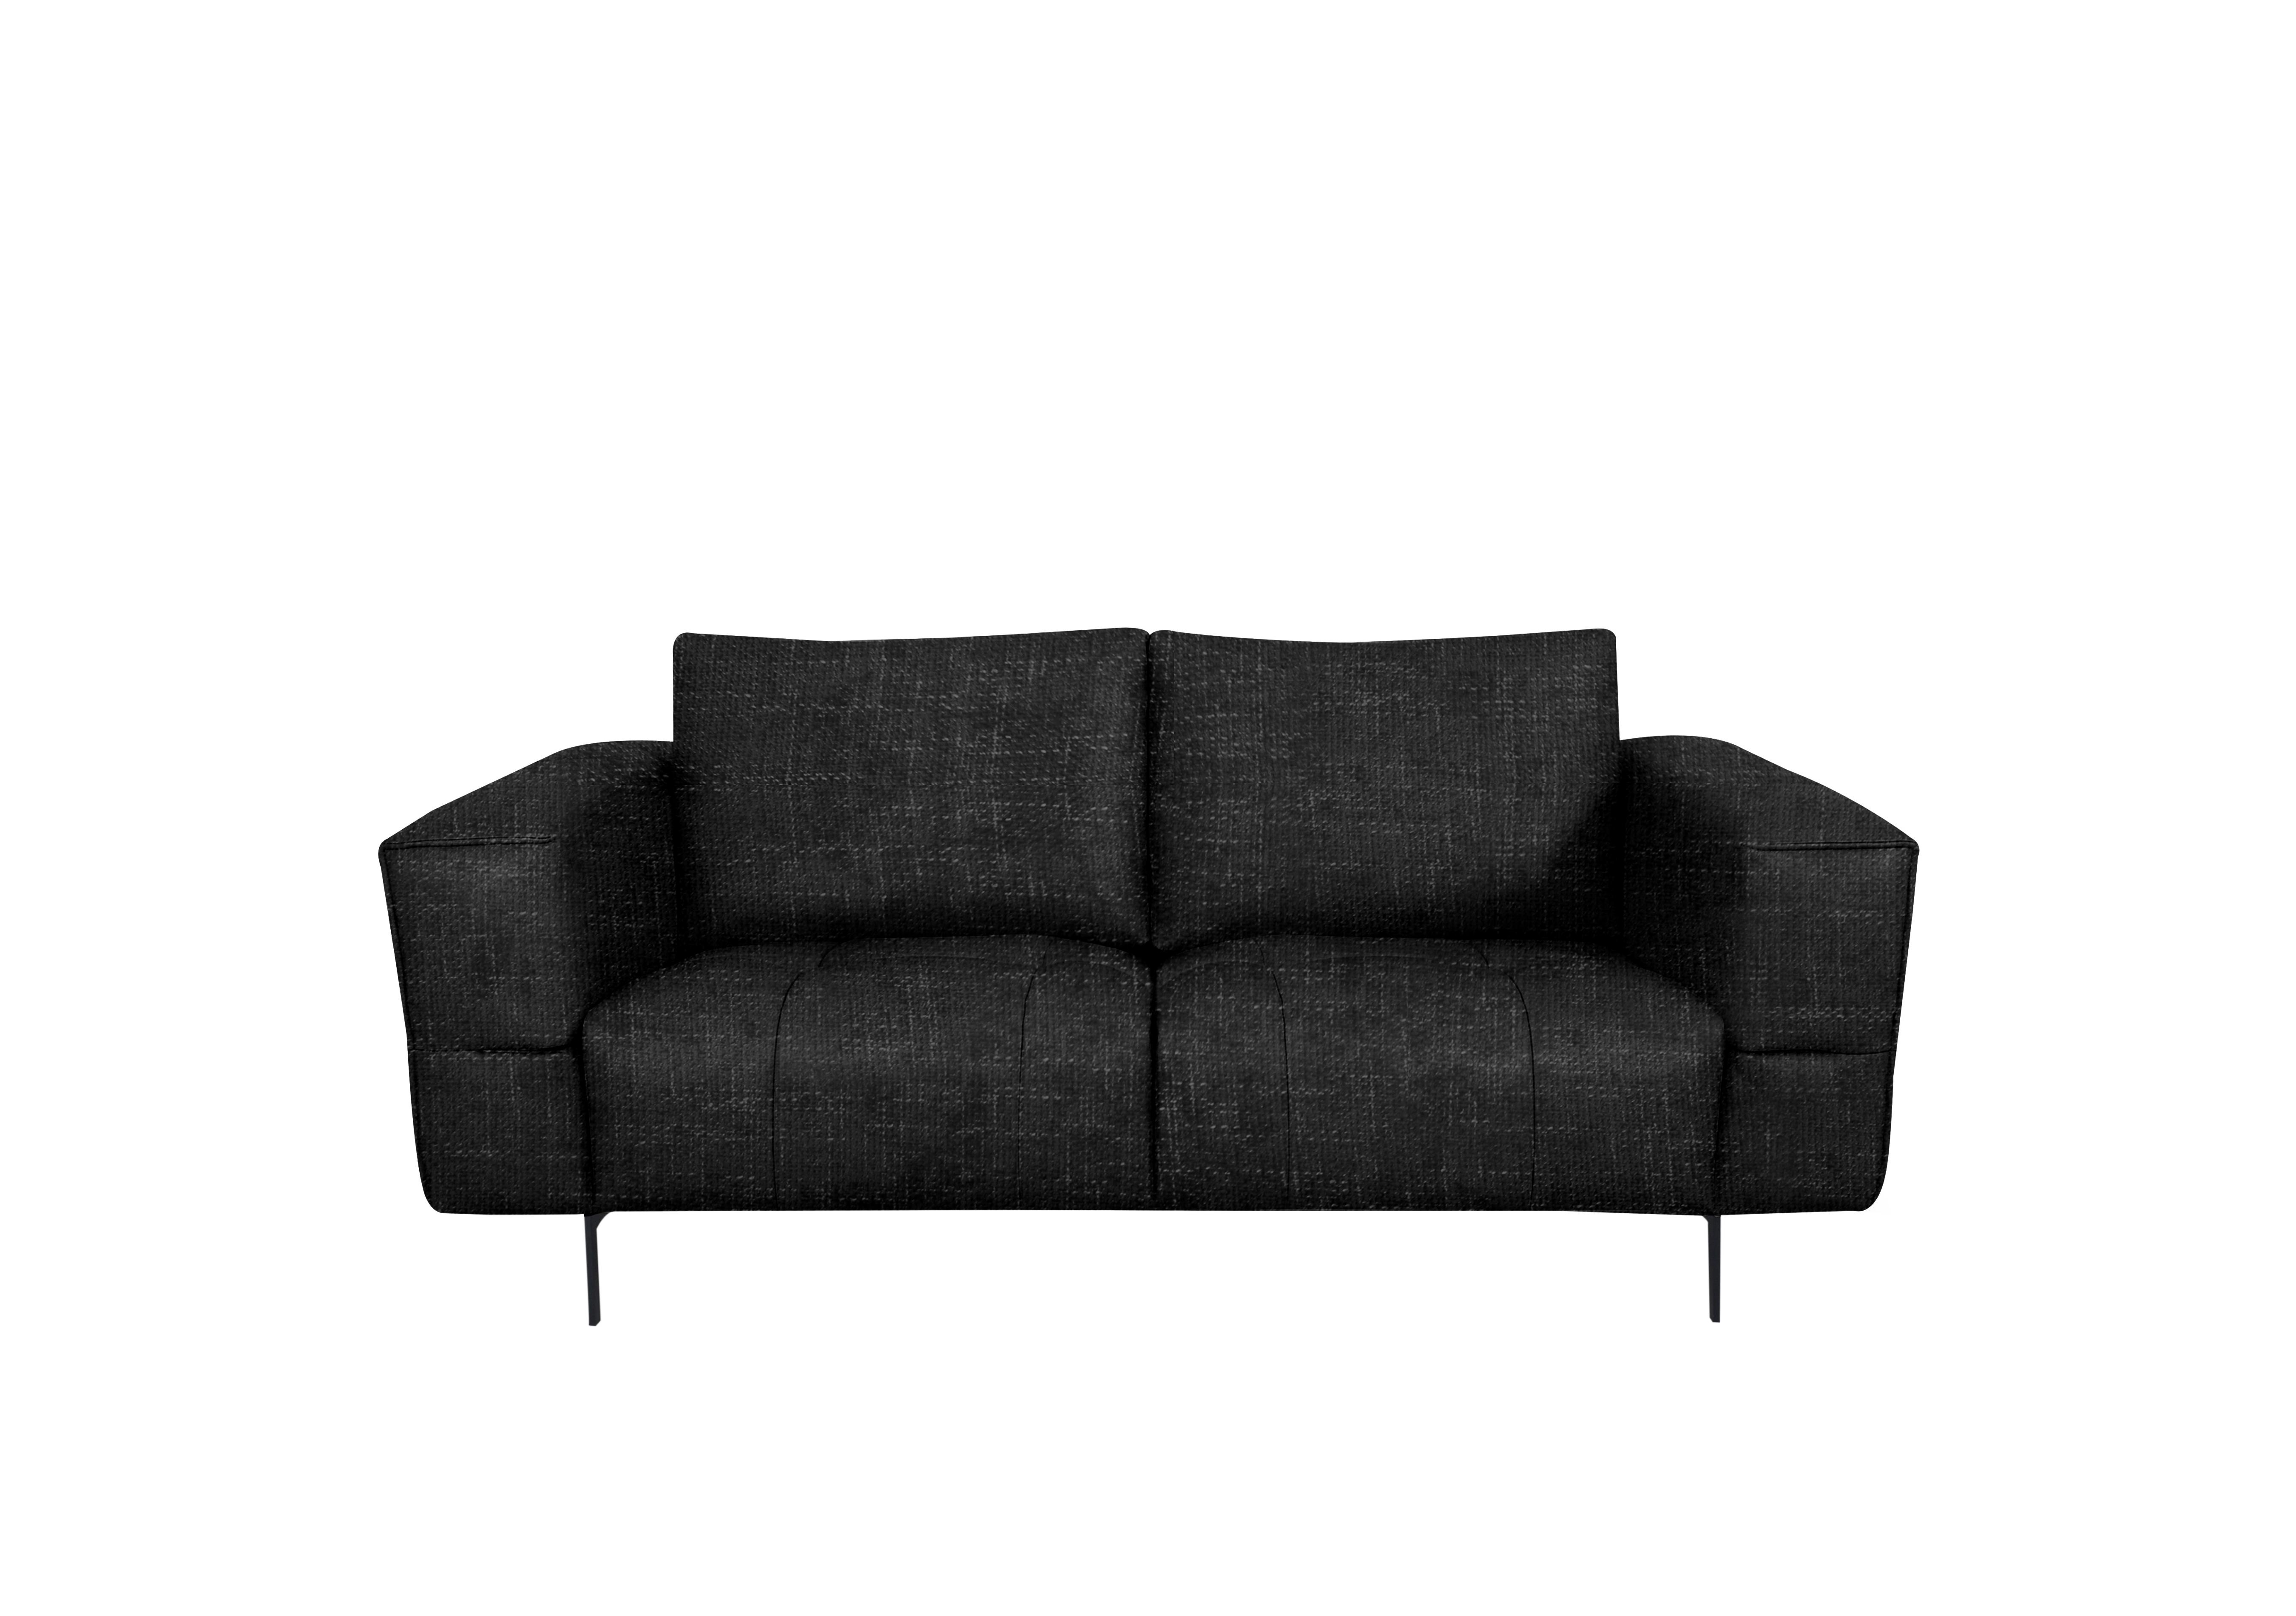 Lawson 2 Seater Fabric Sofa in Fab-Cac-R463 Black Mica on Furniture Village